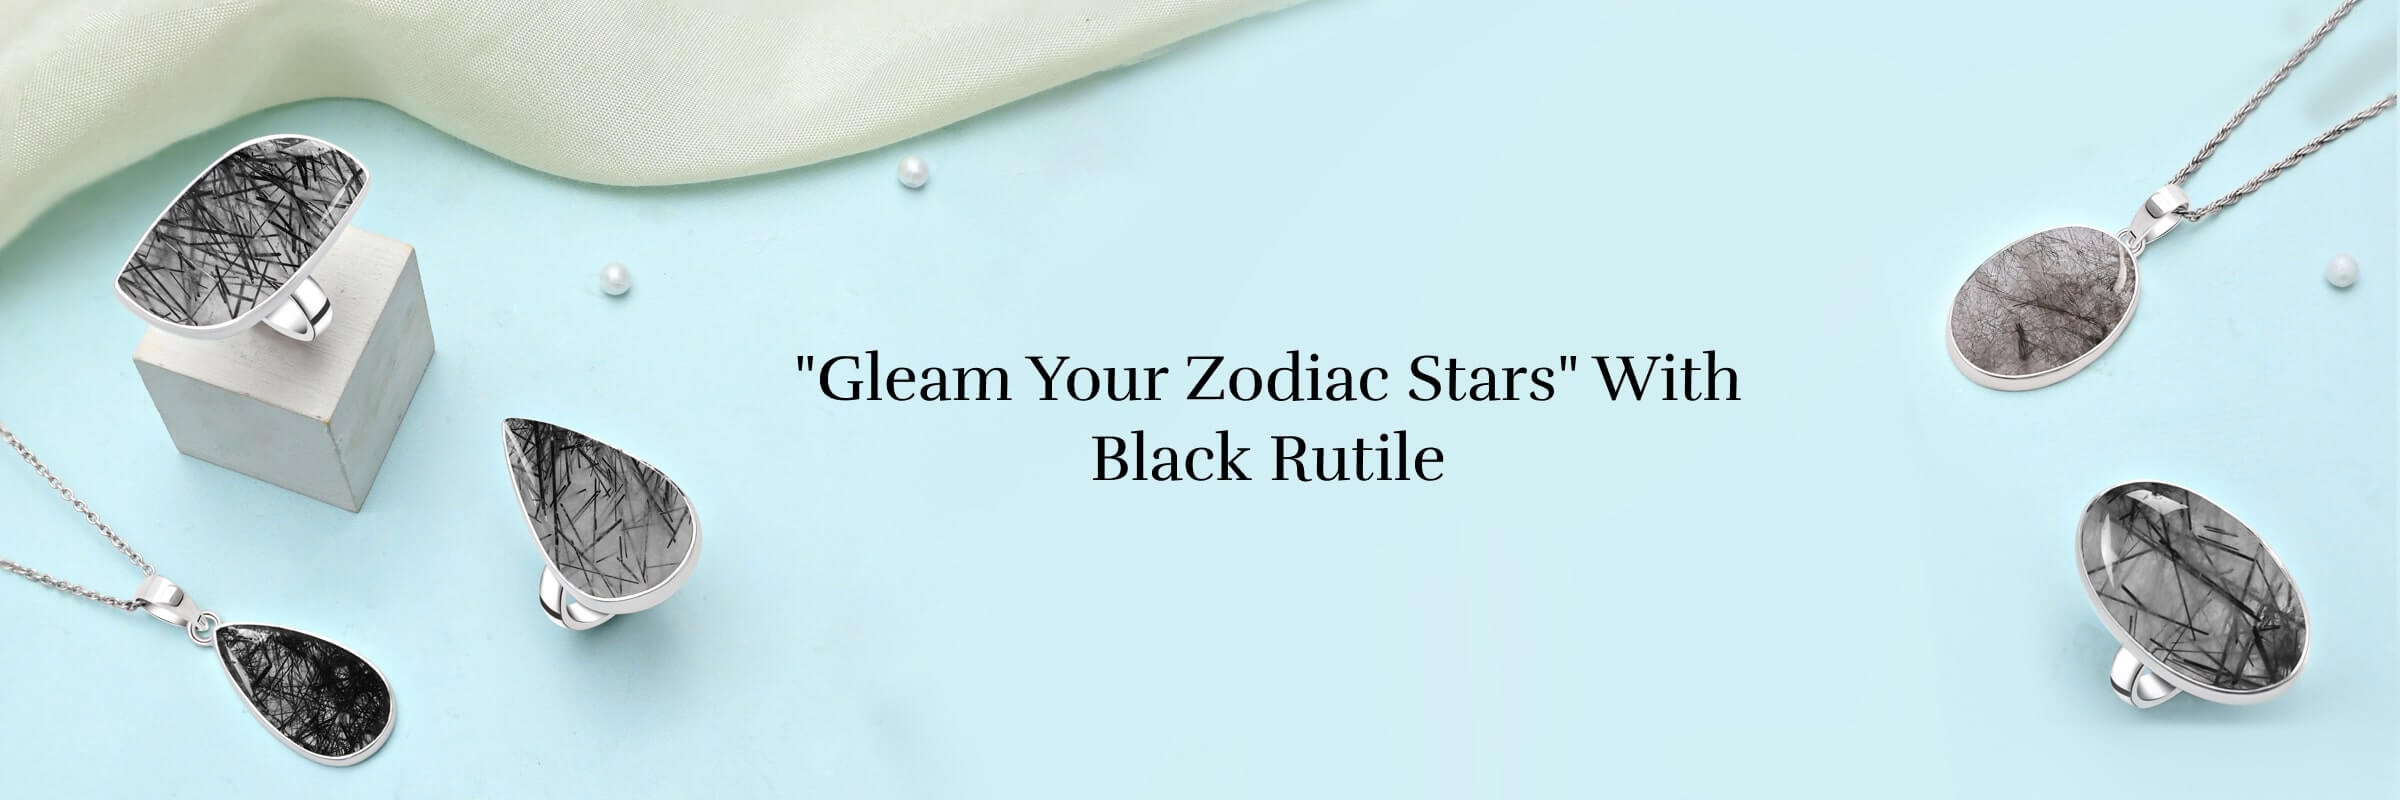 Black Rutile Zodiac Sign